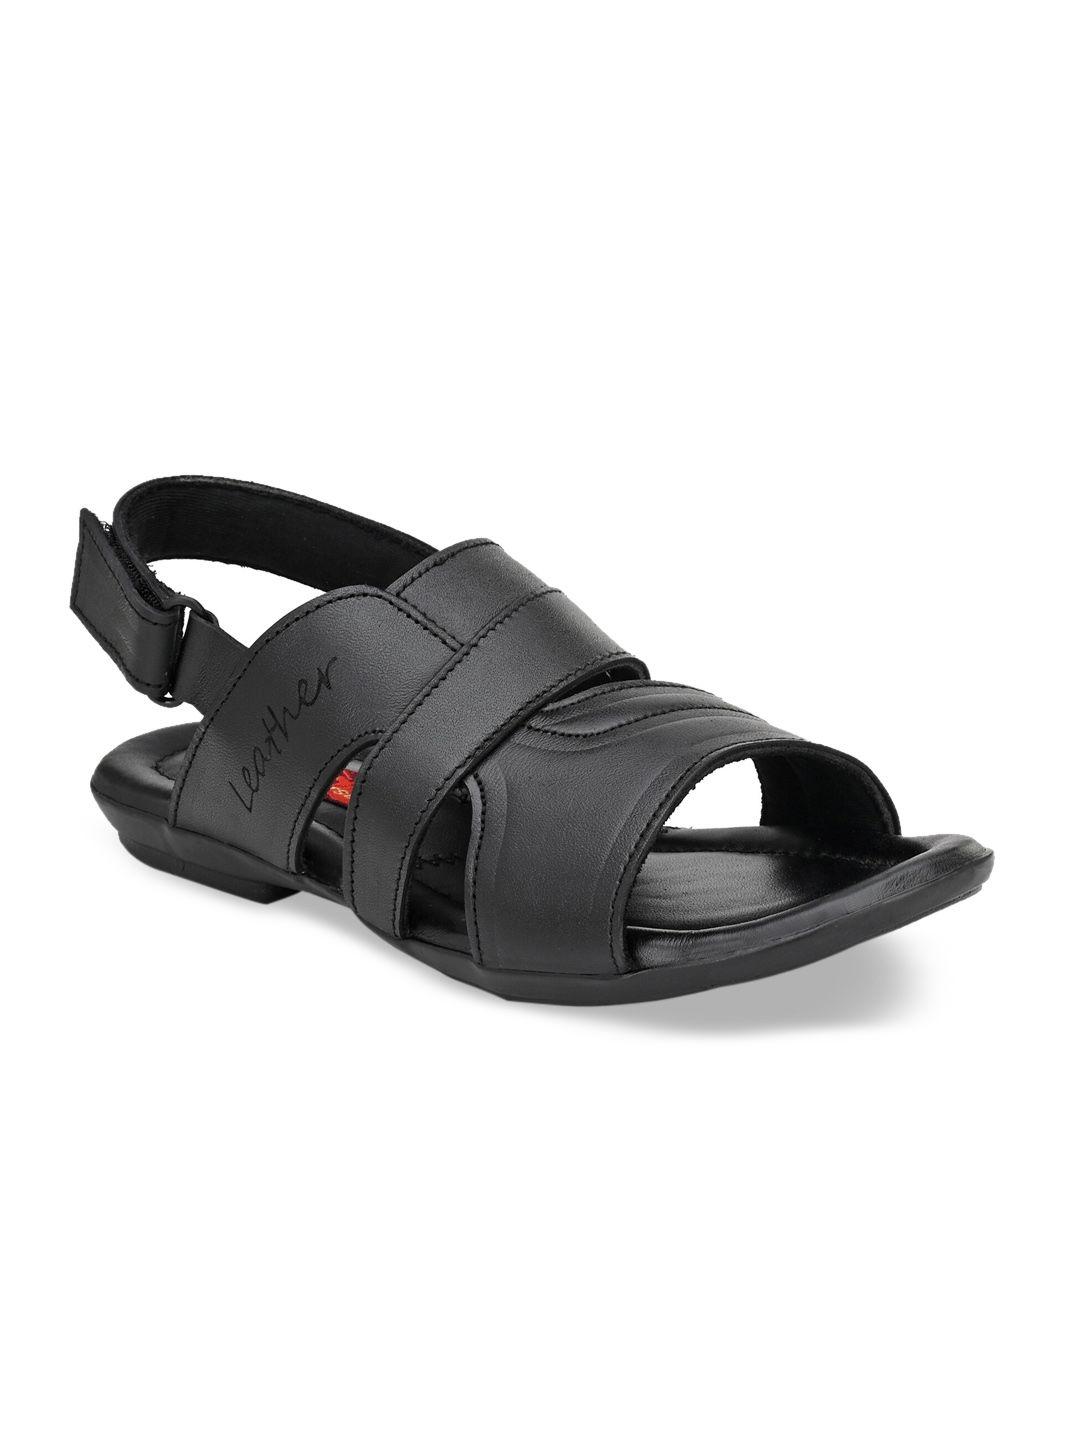 john-karsun-men-black-leather-sandals